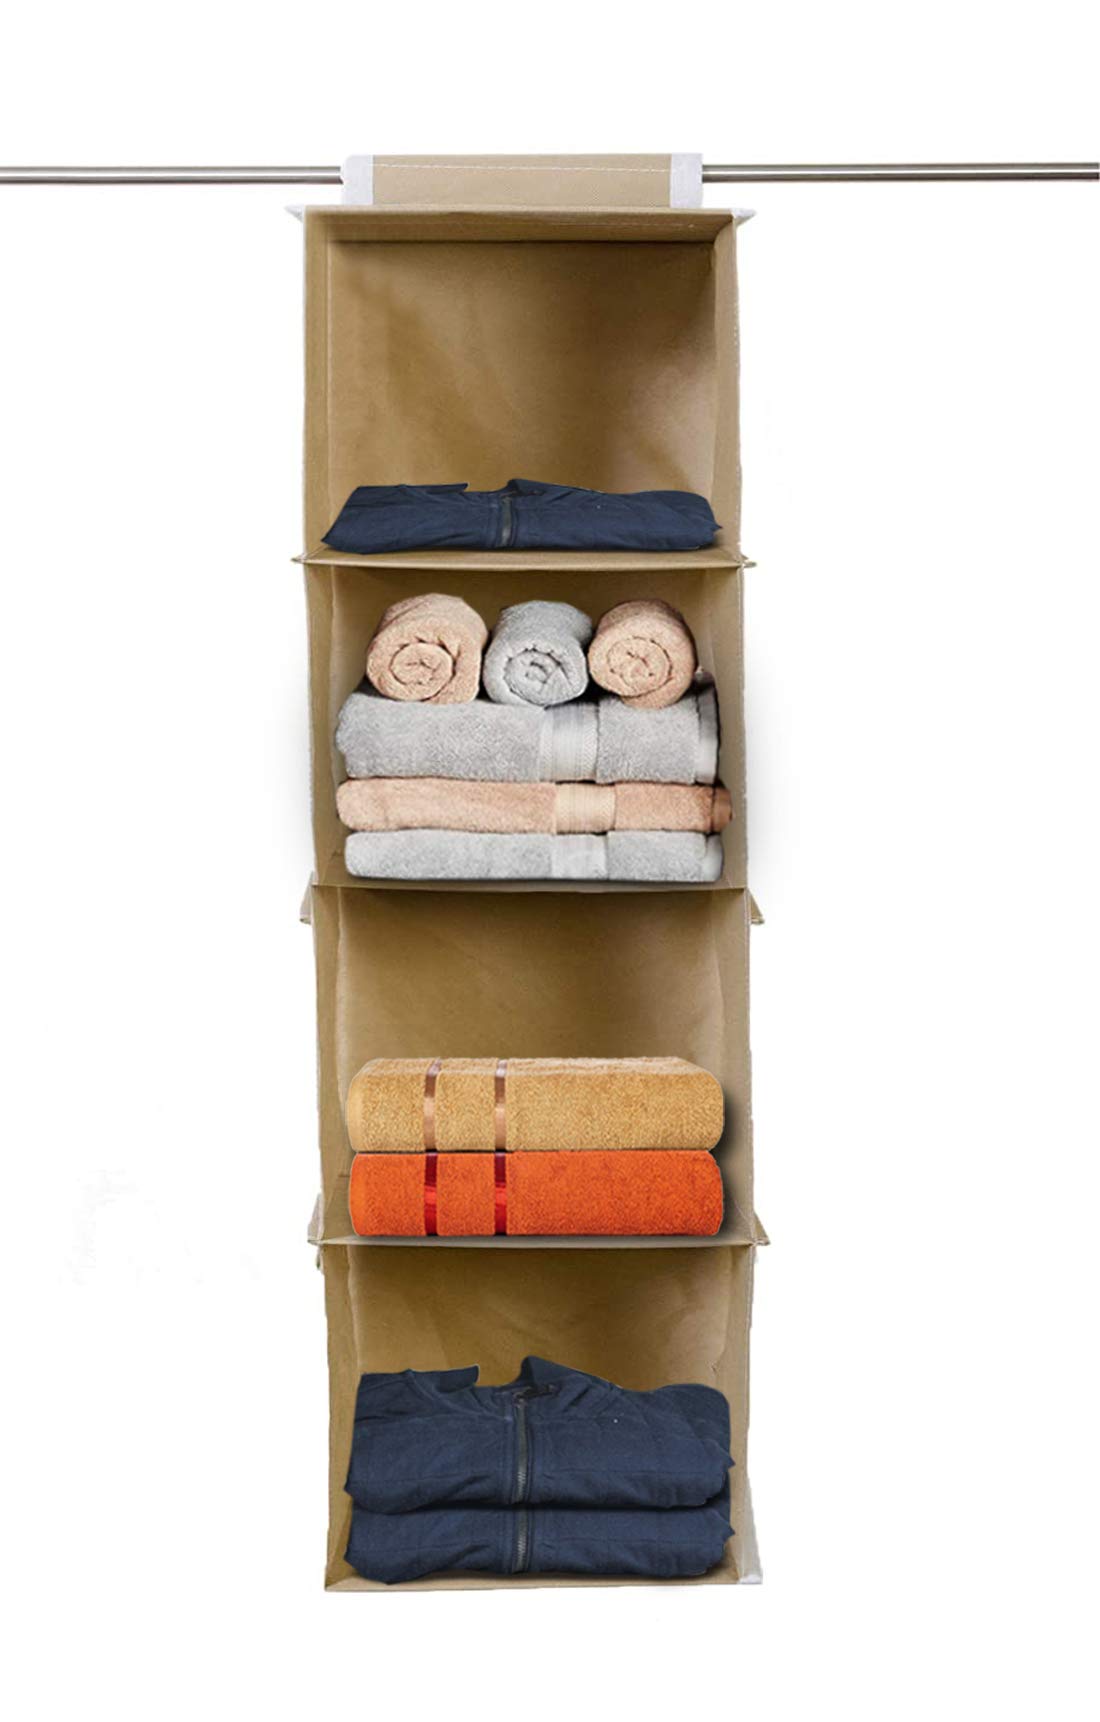 Kuber Industries Fabric 4 Shelf Foldable Closet Organizer|Universal Fit 4 Tier Closet Wardrobe Organizer|Clothes Storage Hanger|Size 31 x 25 x 80 Cm, Pack of 2 (Brown)